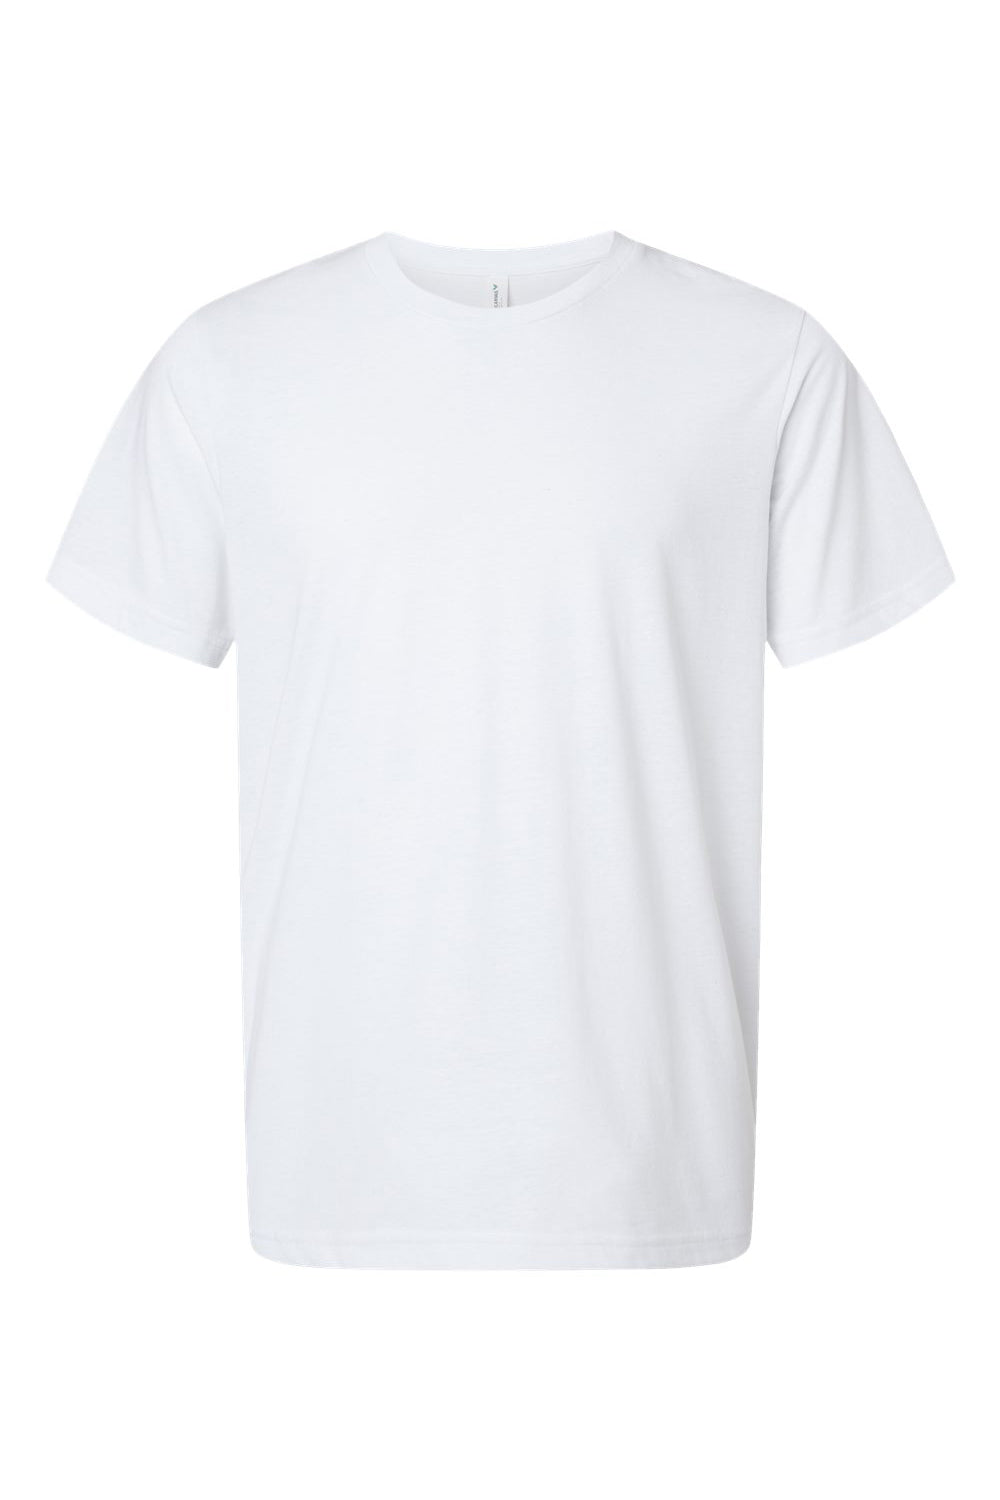 Bella + Canvas 3001ECO Mens EcoMax Short Sleeve Crewneck T-Shirt White Flat Front